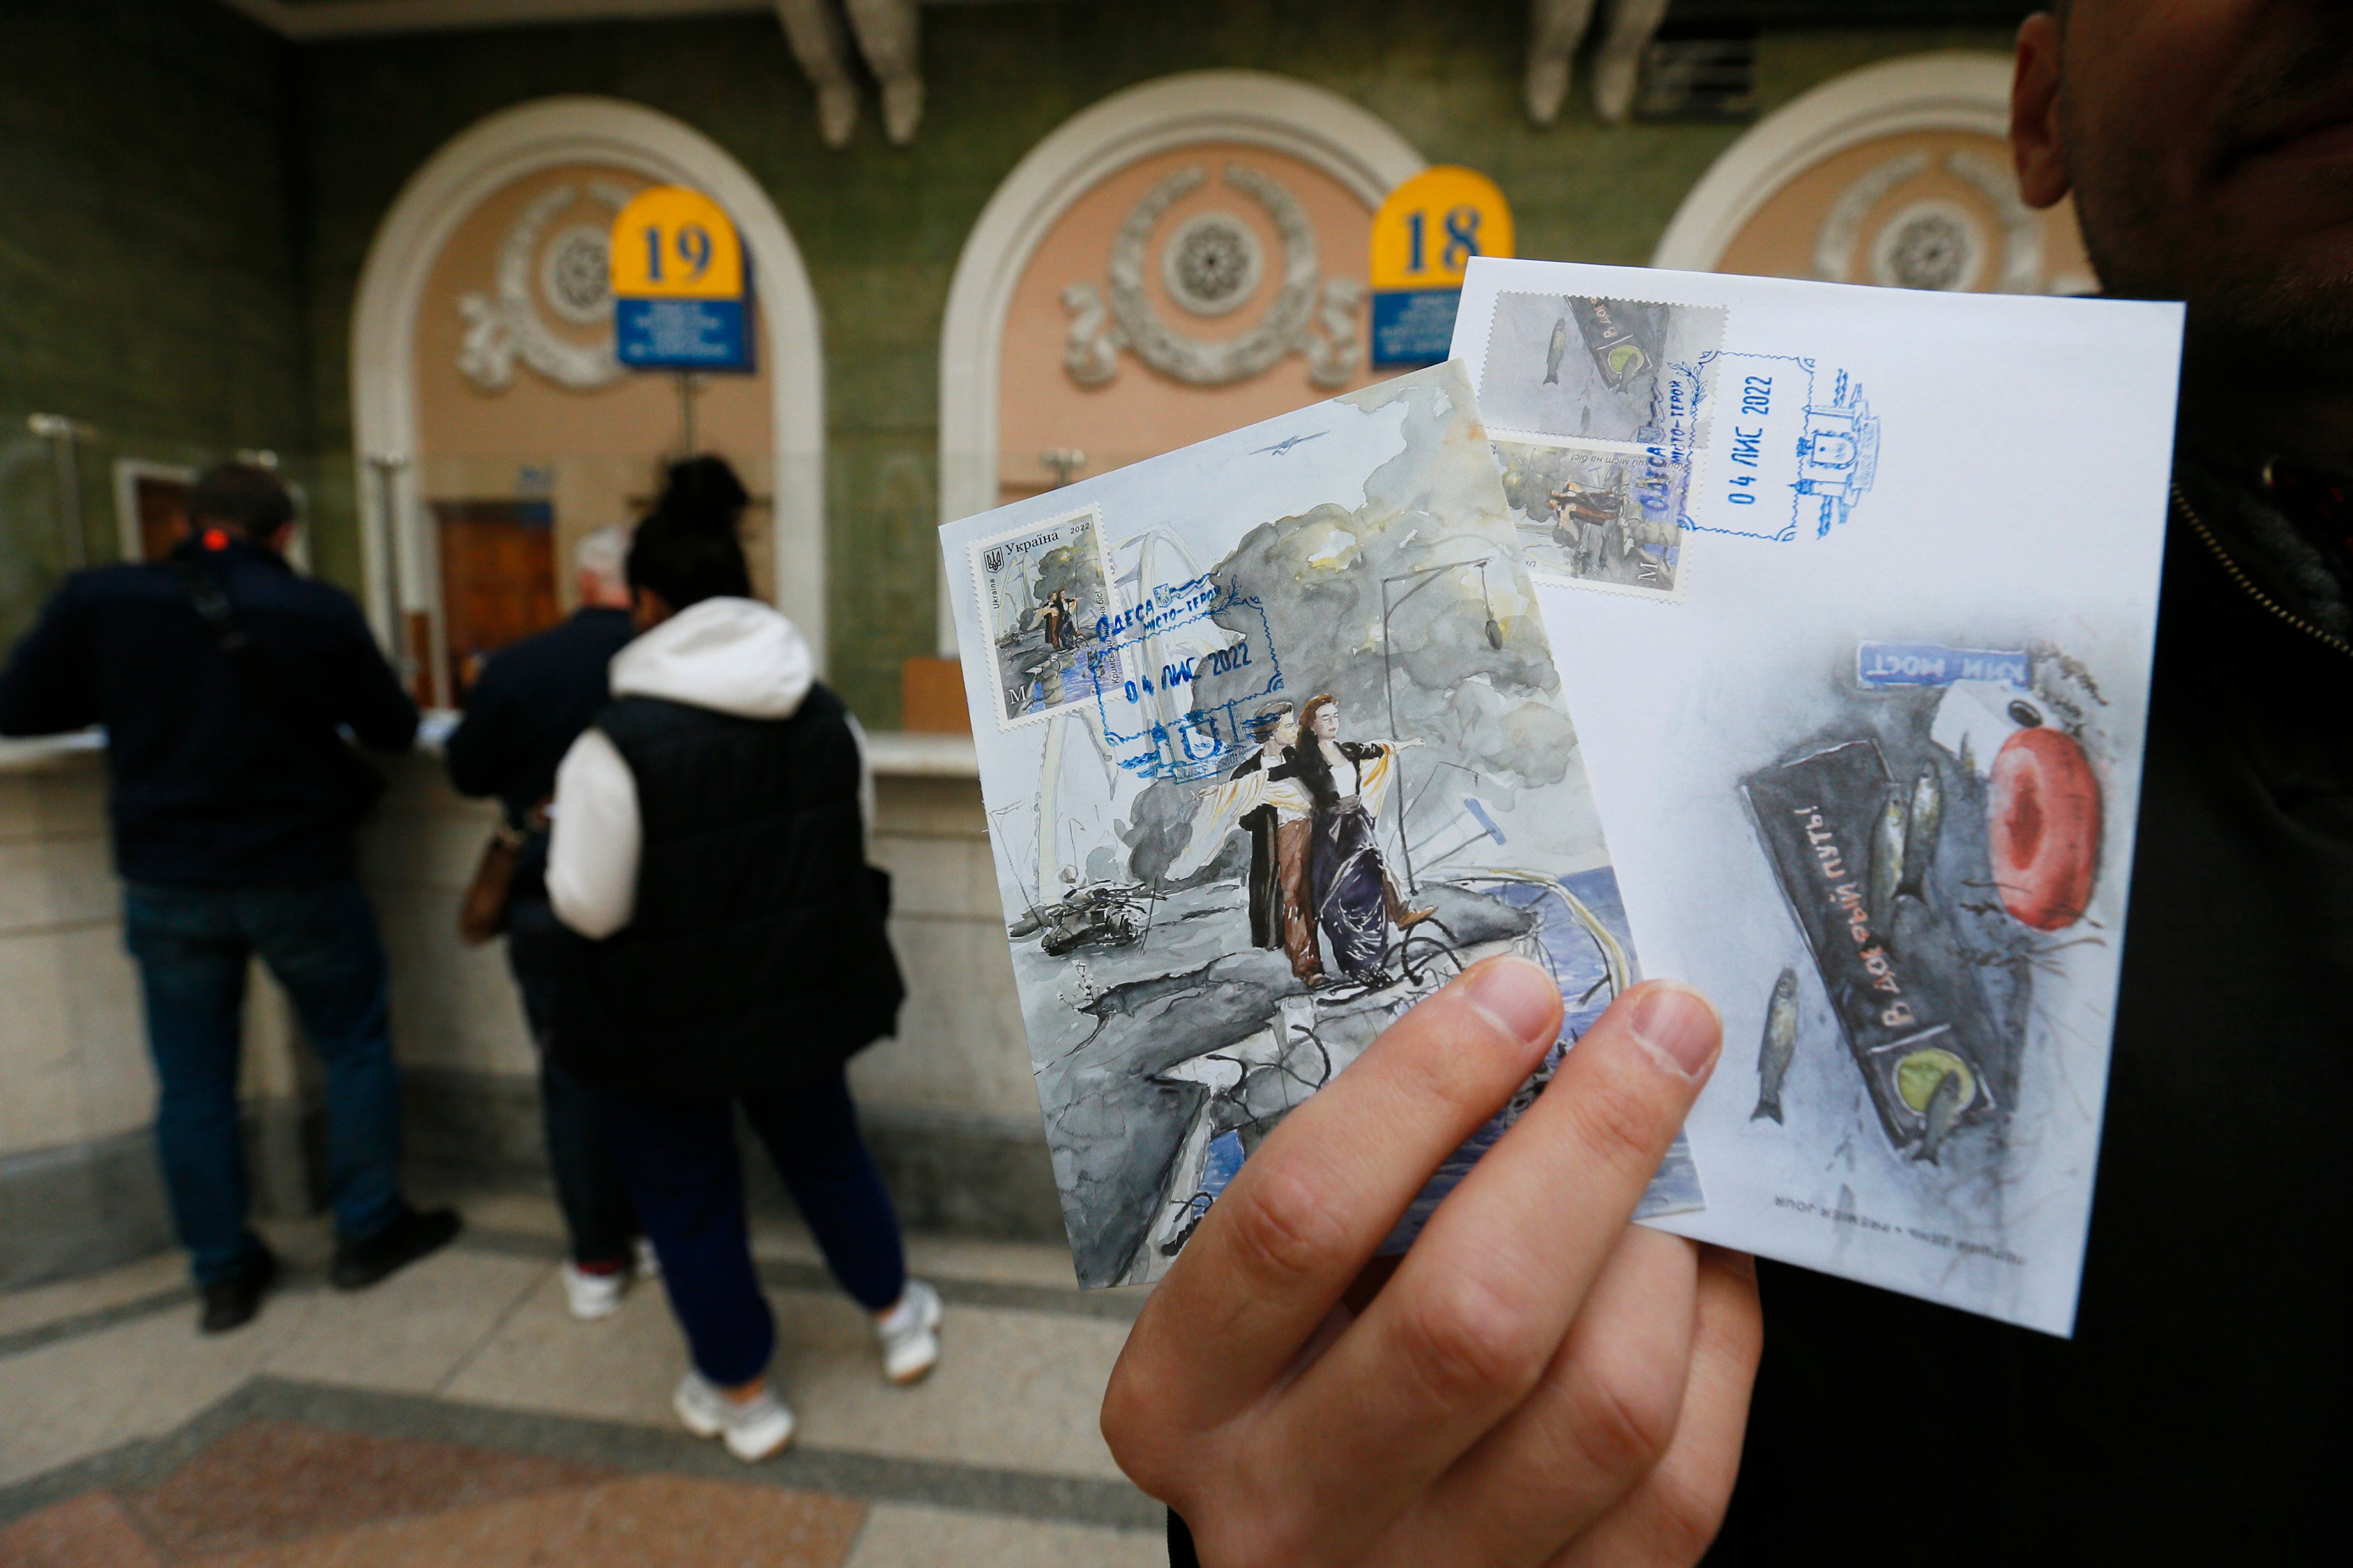 Ukrposhta Issued A New Postage Stamp &#039;&#039;Crimean Bridge For An Encore!&amp;quot; In Odesa, Amid Russia&#039;s Invasion Of Ukraine.